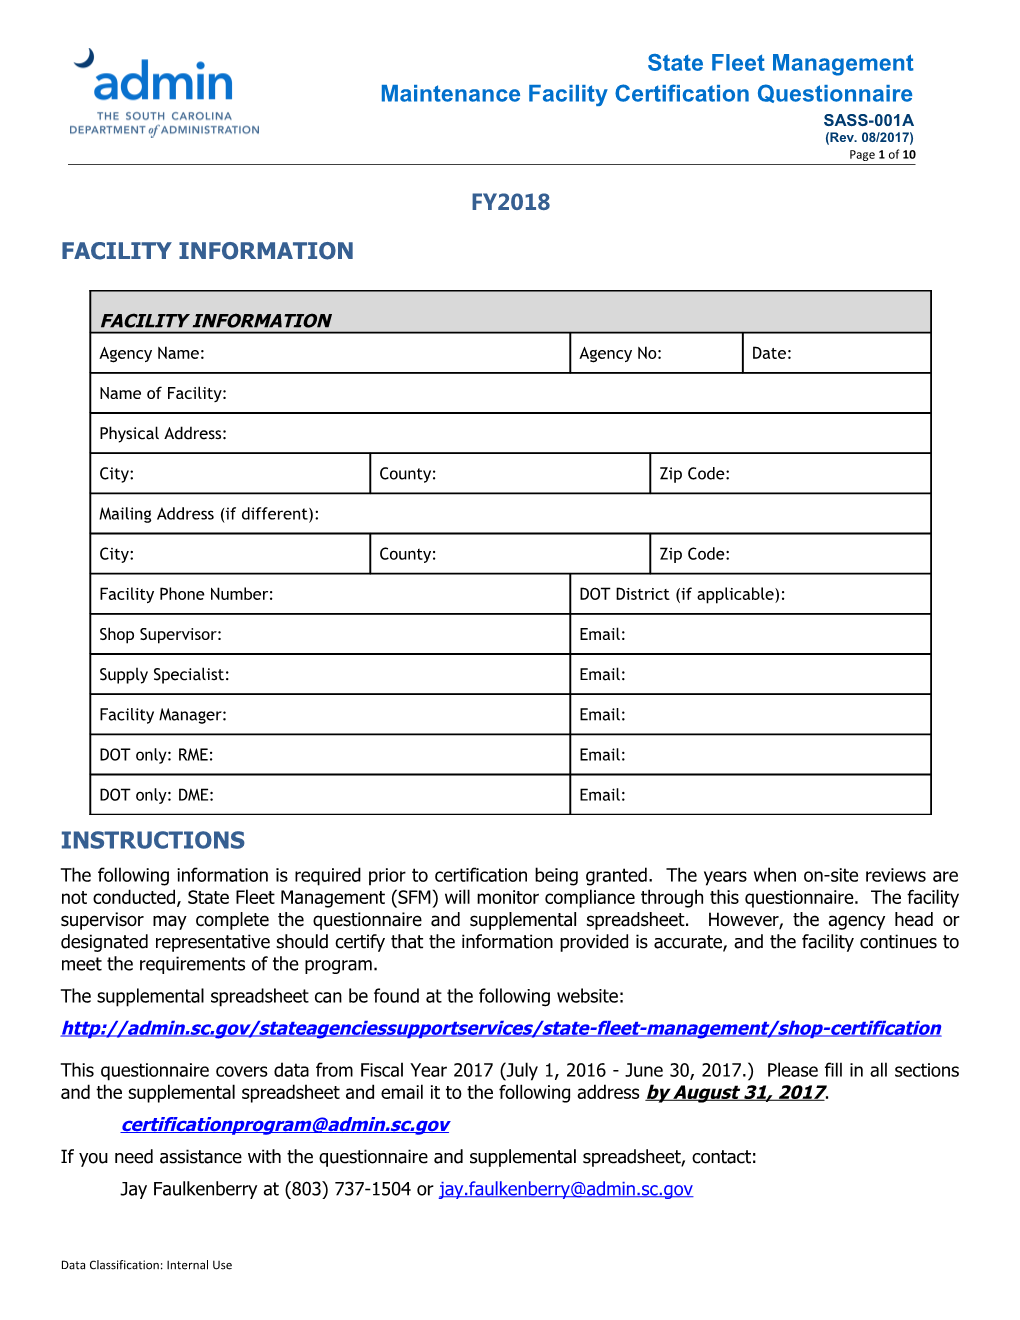 Facility Information s3